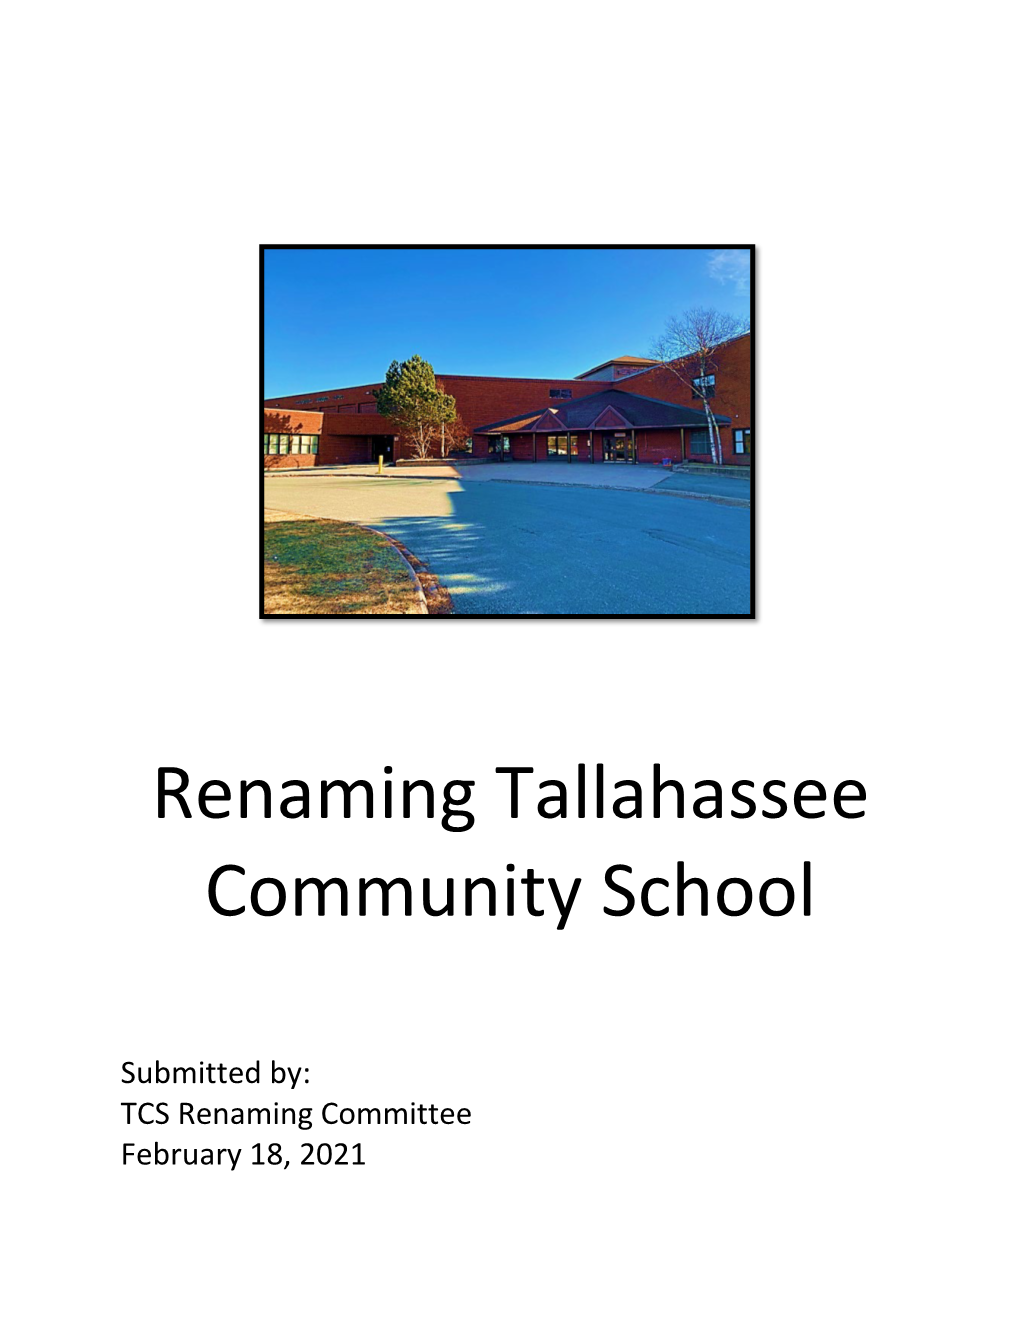 Renaming Tallahassee Community School